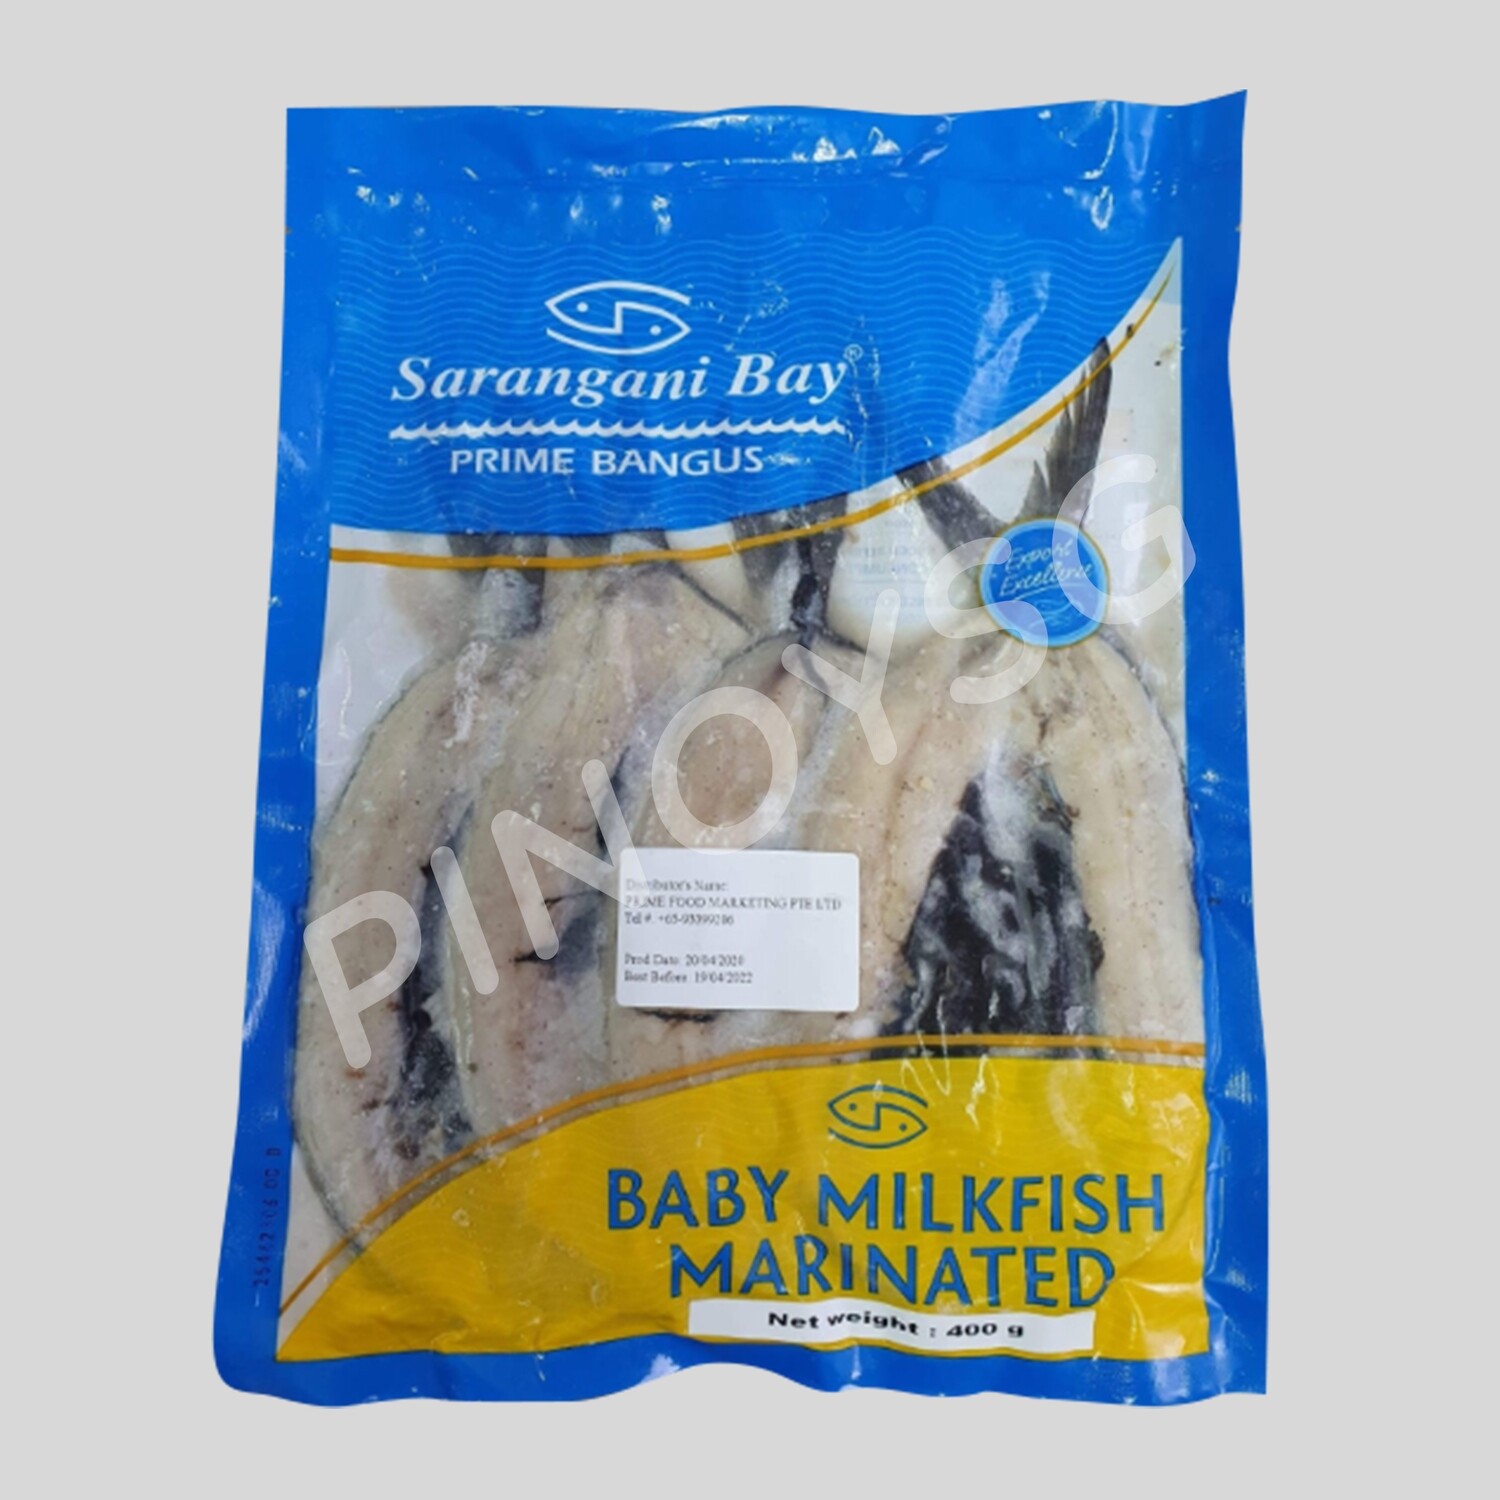 Sarangani Baby Milkfish Marinated 4pcs (Daing) not boneless but crunchy - 400g